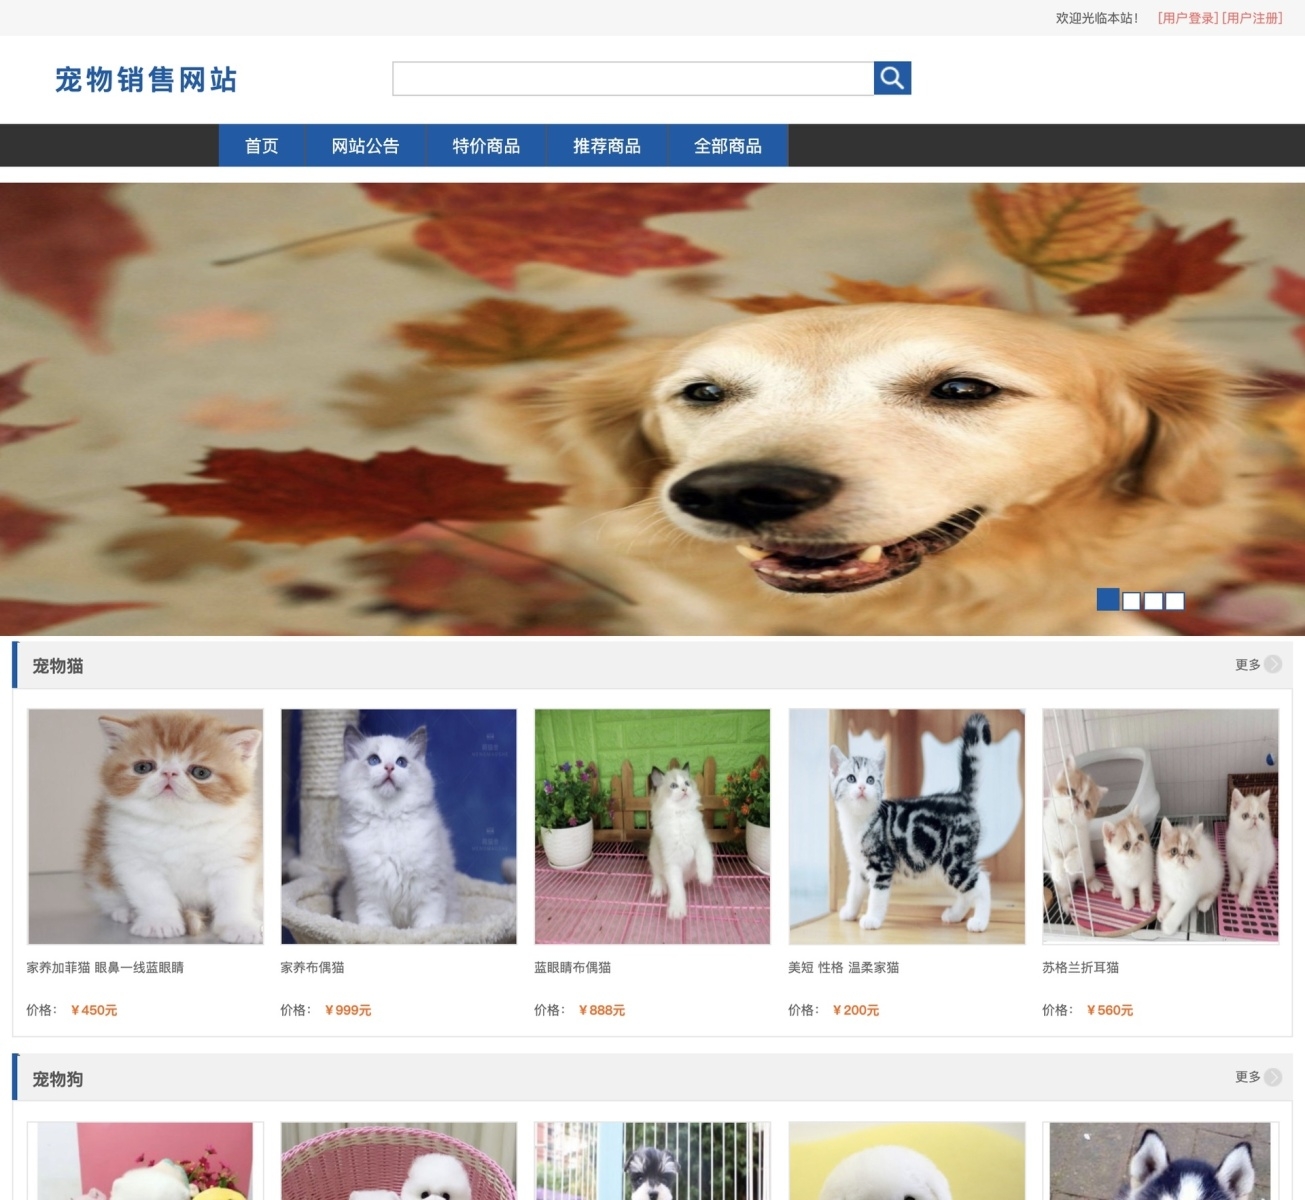 java 宠物销售网站 宠物销售系统 宠物商店管理系统 宠物